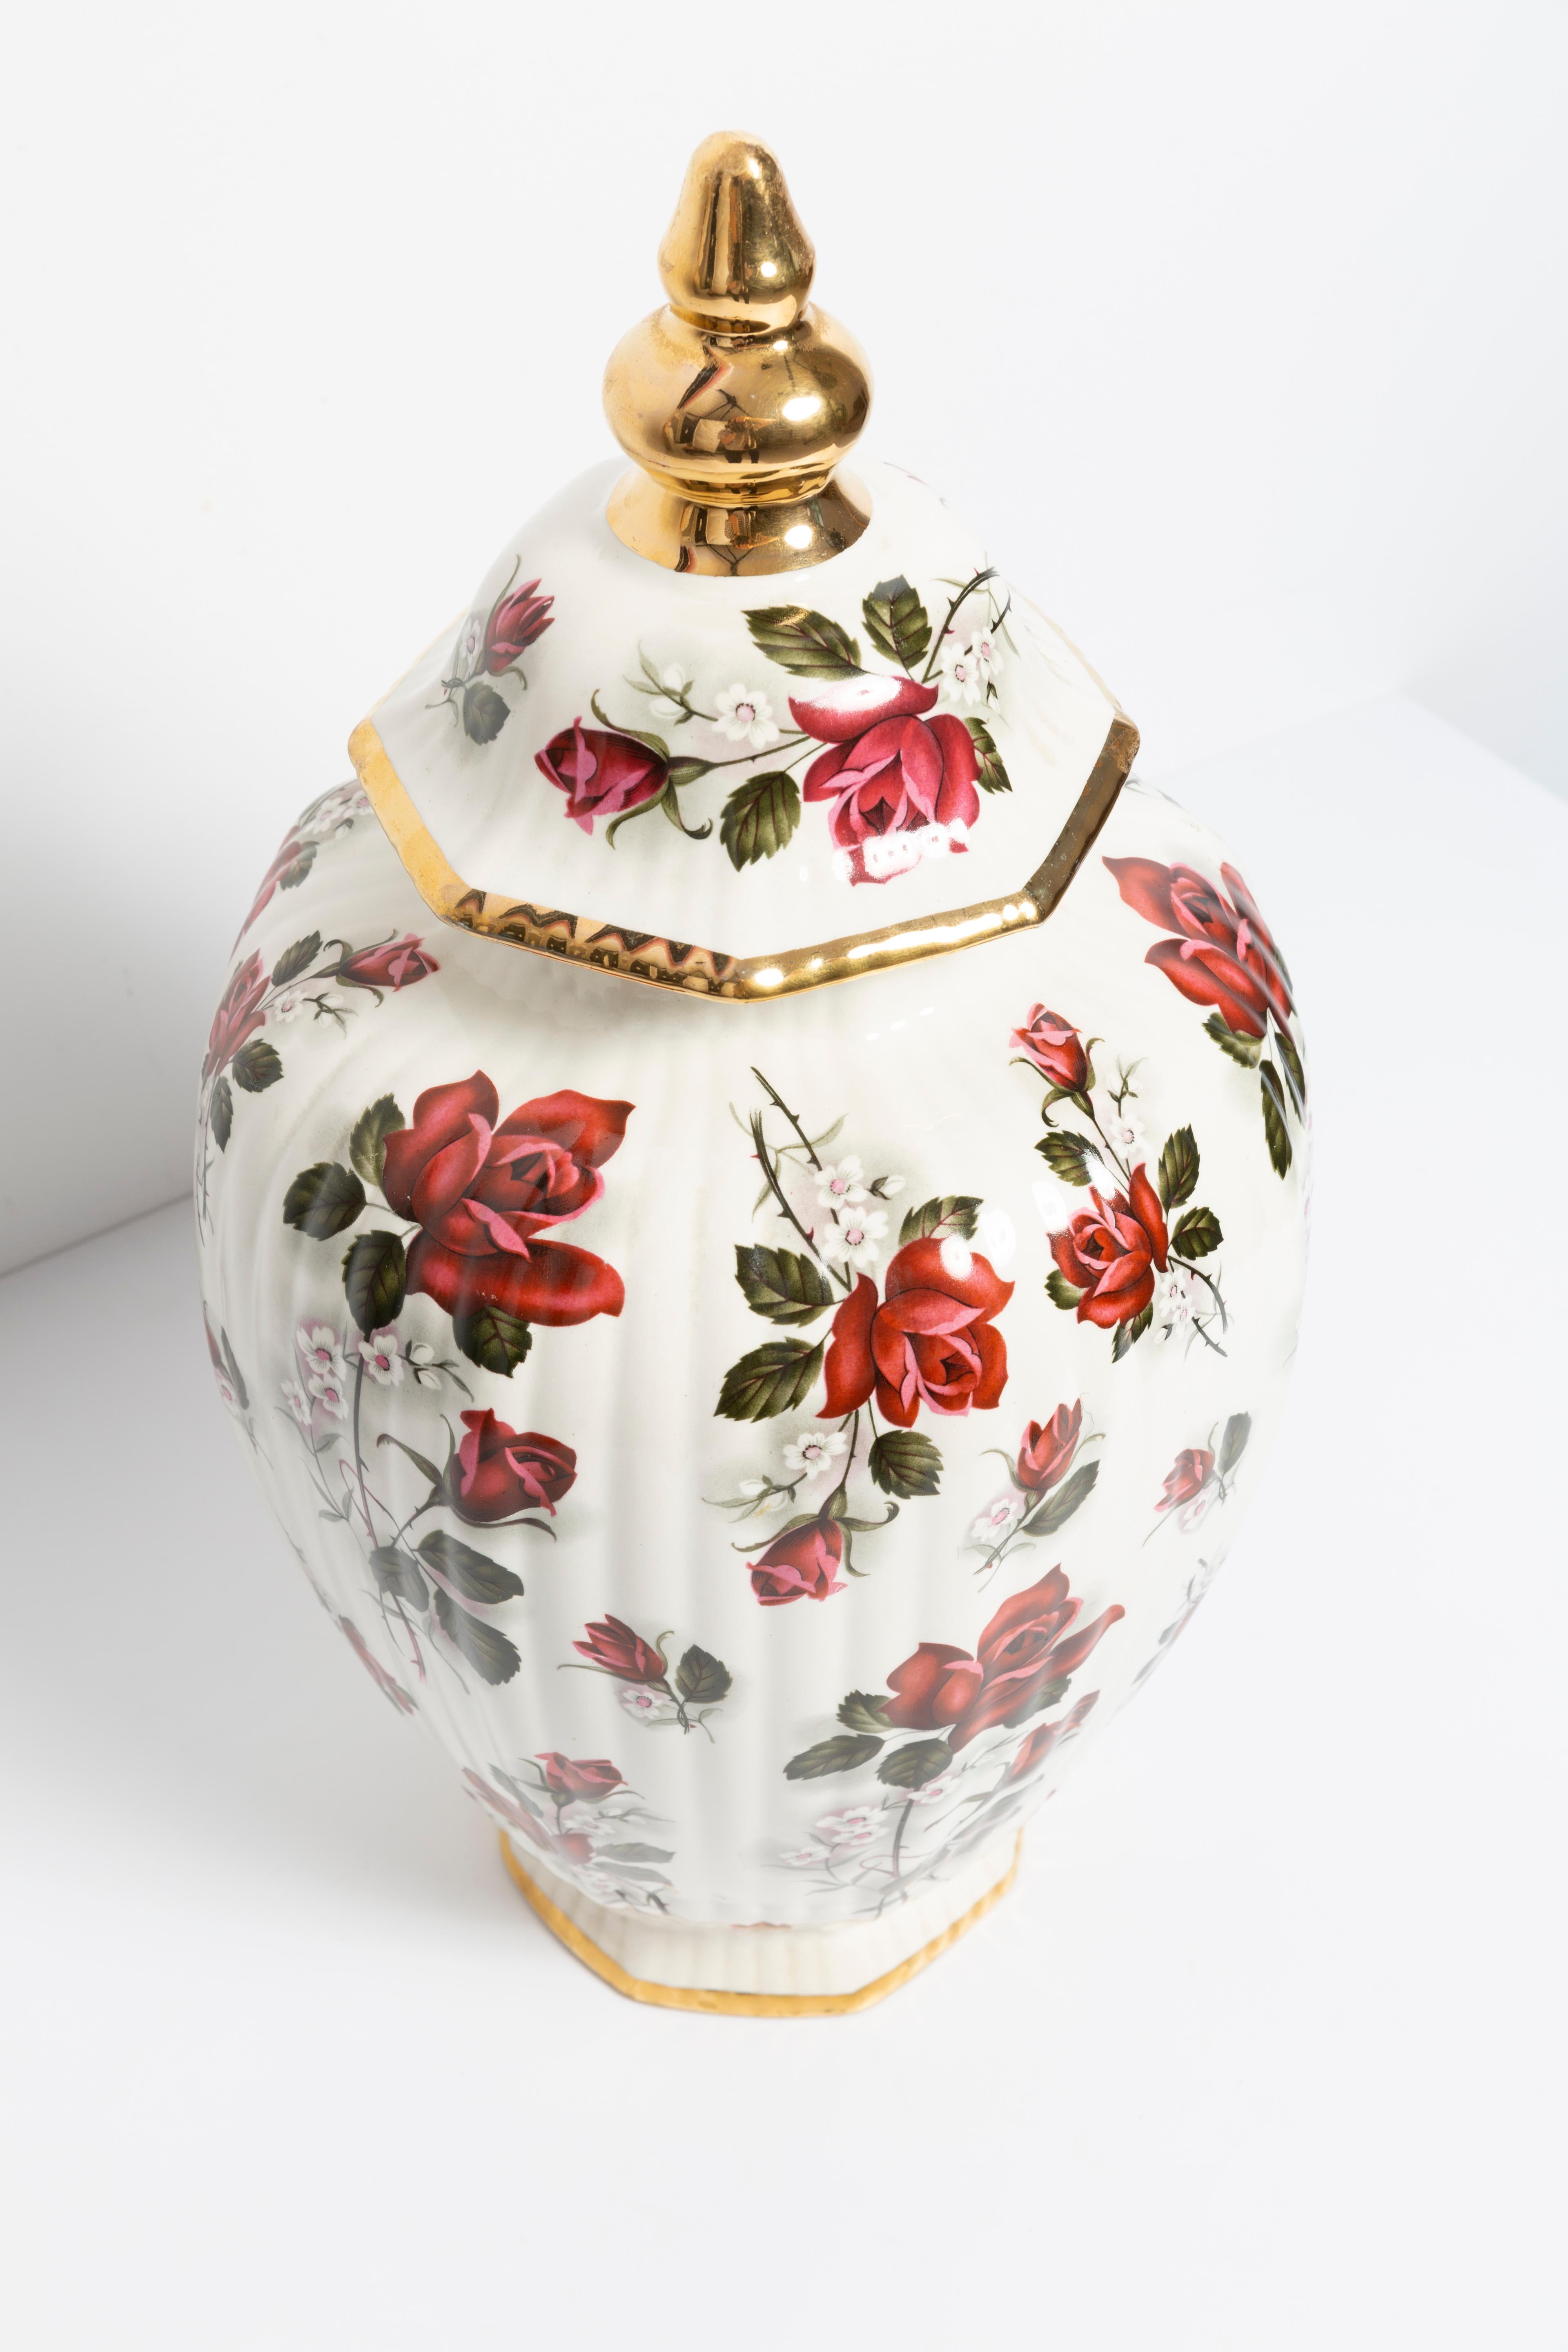 Belgian Big Ceramic Hand Painted Roses Vase Candy Box, 20th Century, Belgium, 1960s For Sale